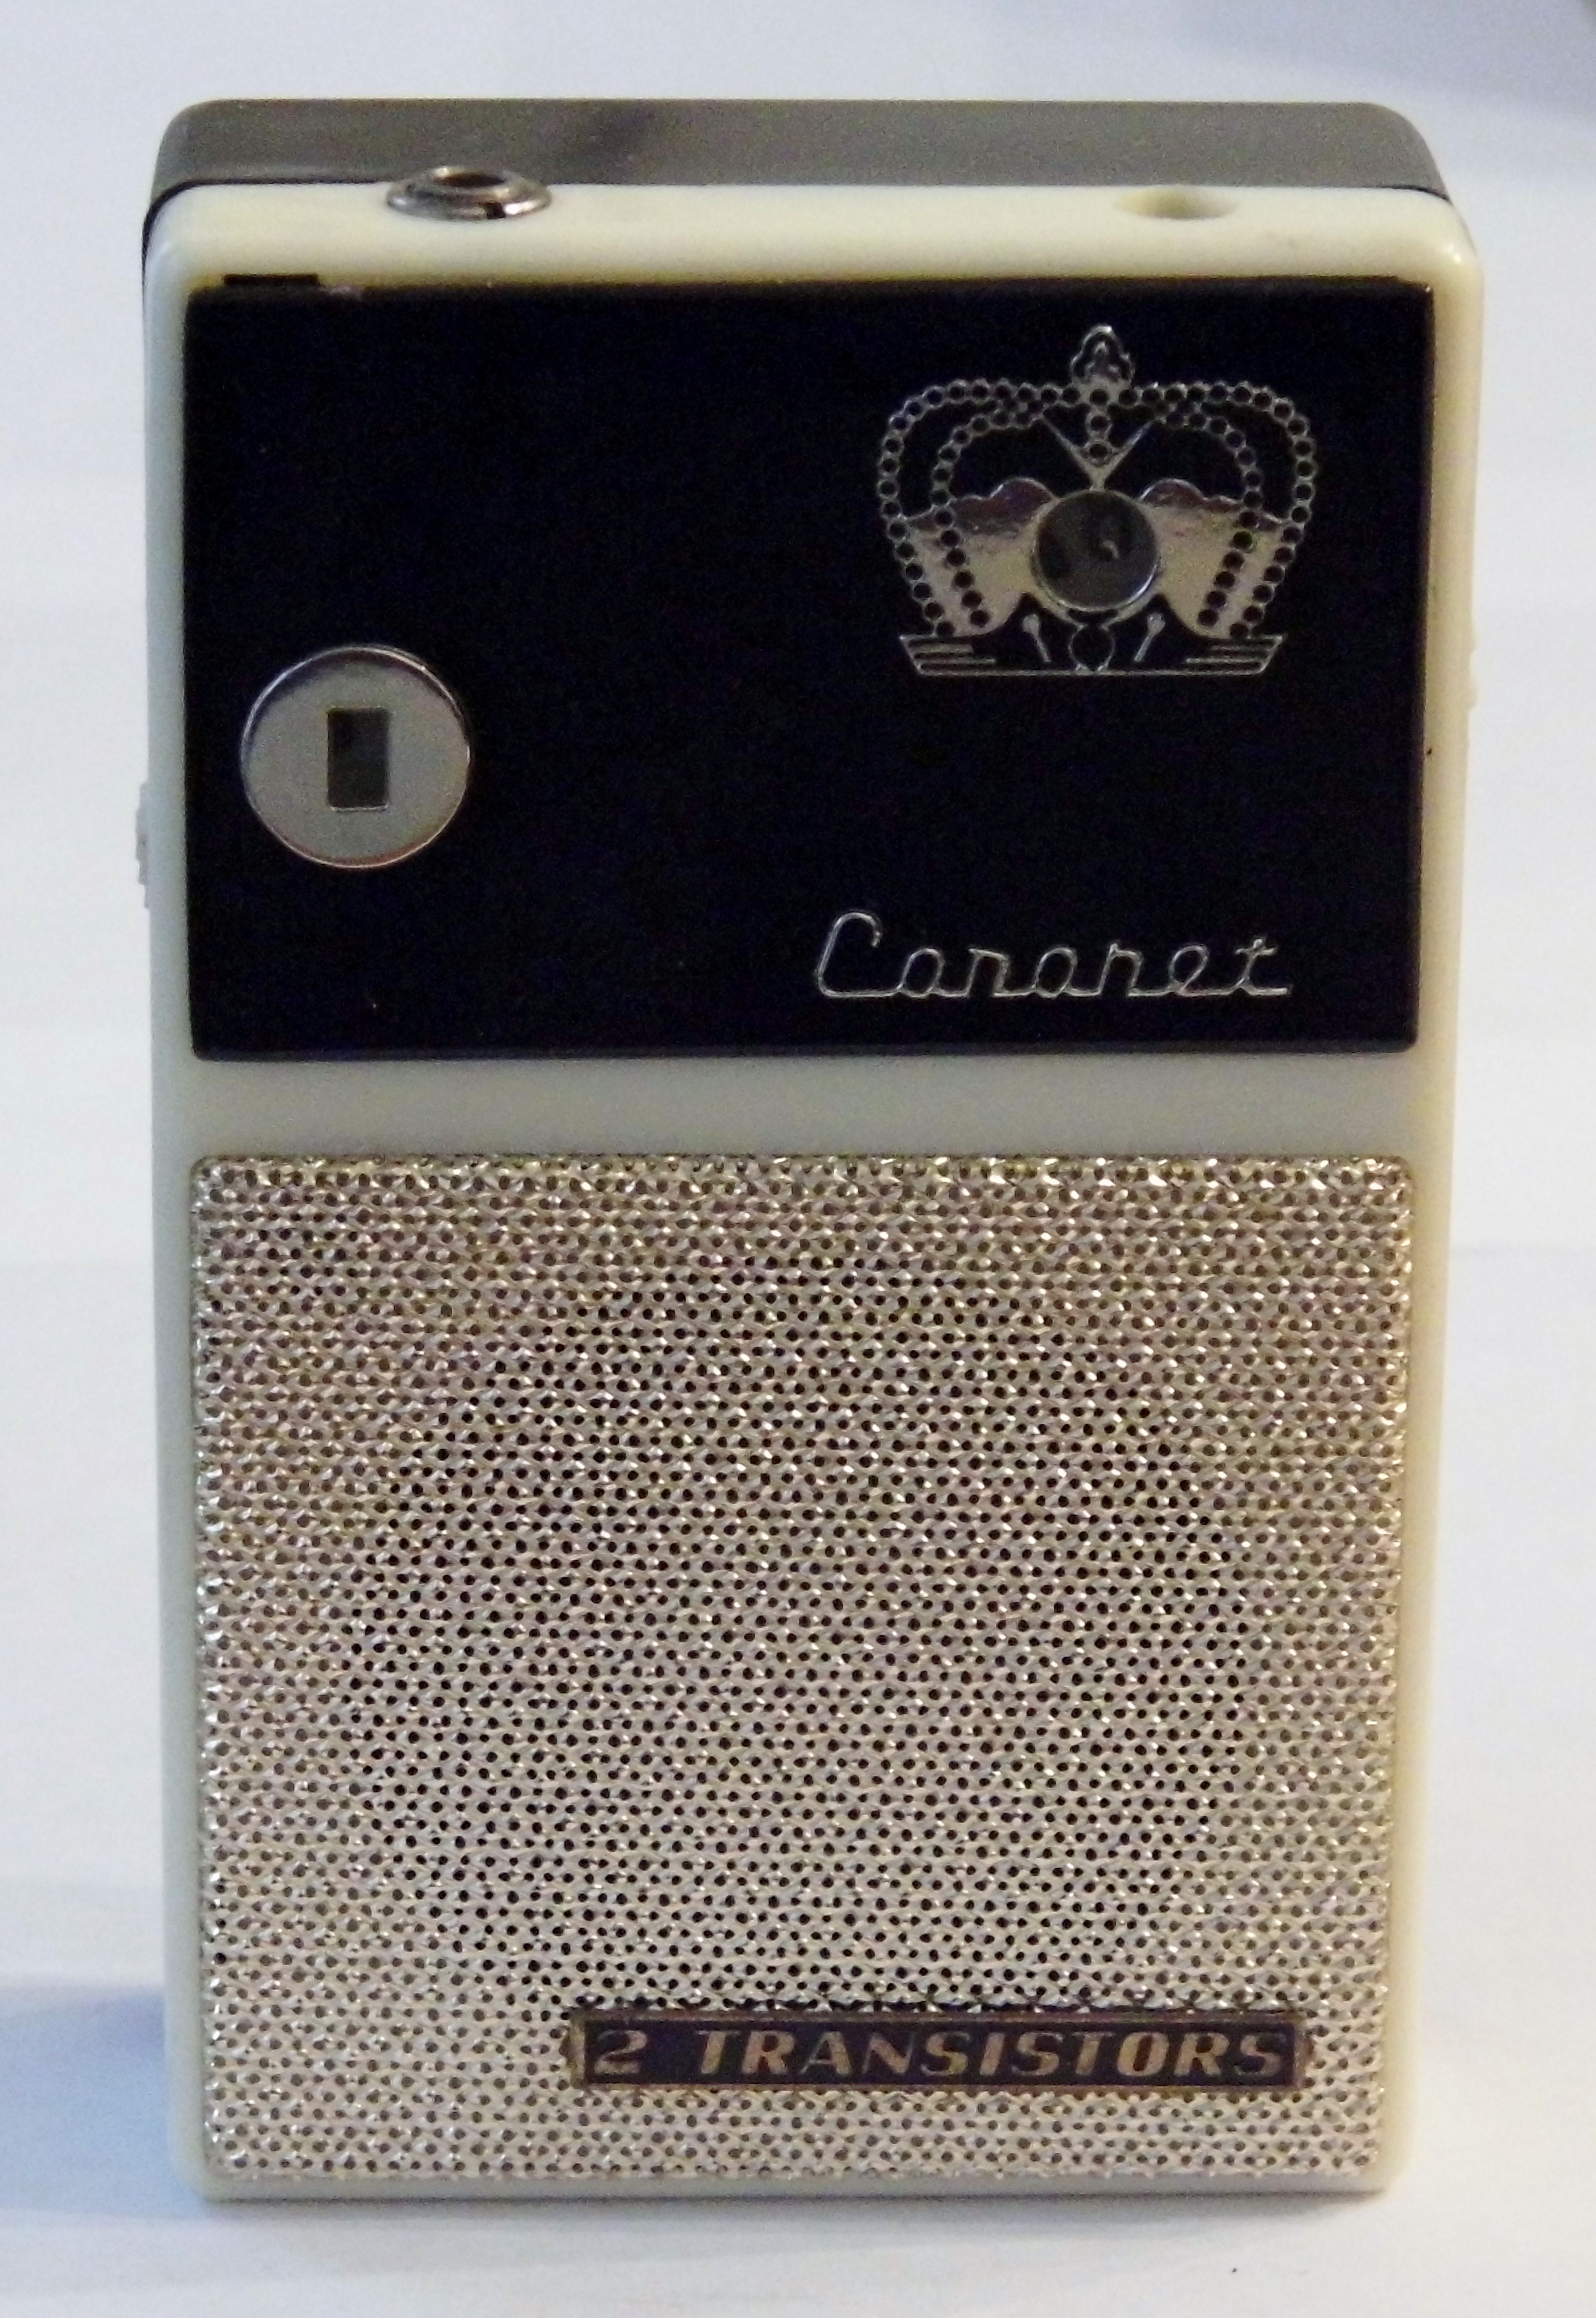 Vintage Coronet 2-Transistor Boy's Radio (No Model Number), Made in Japan (8441771686)